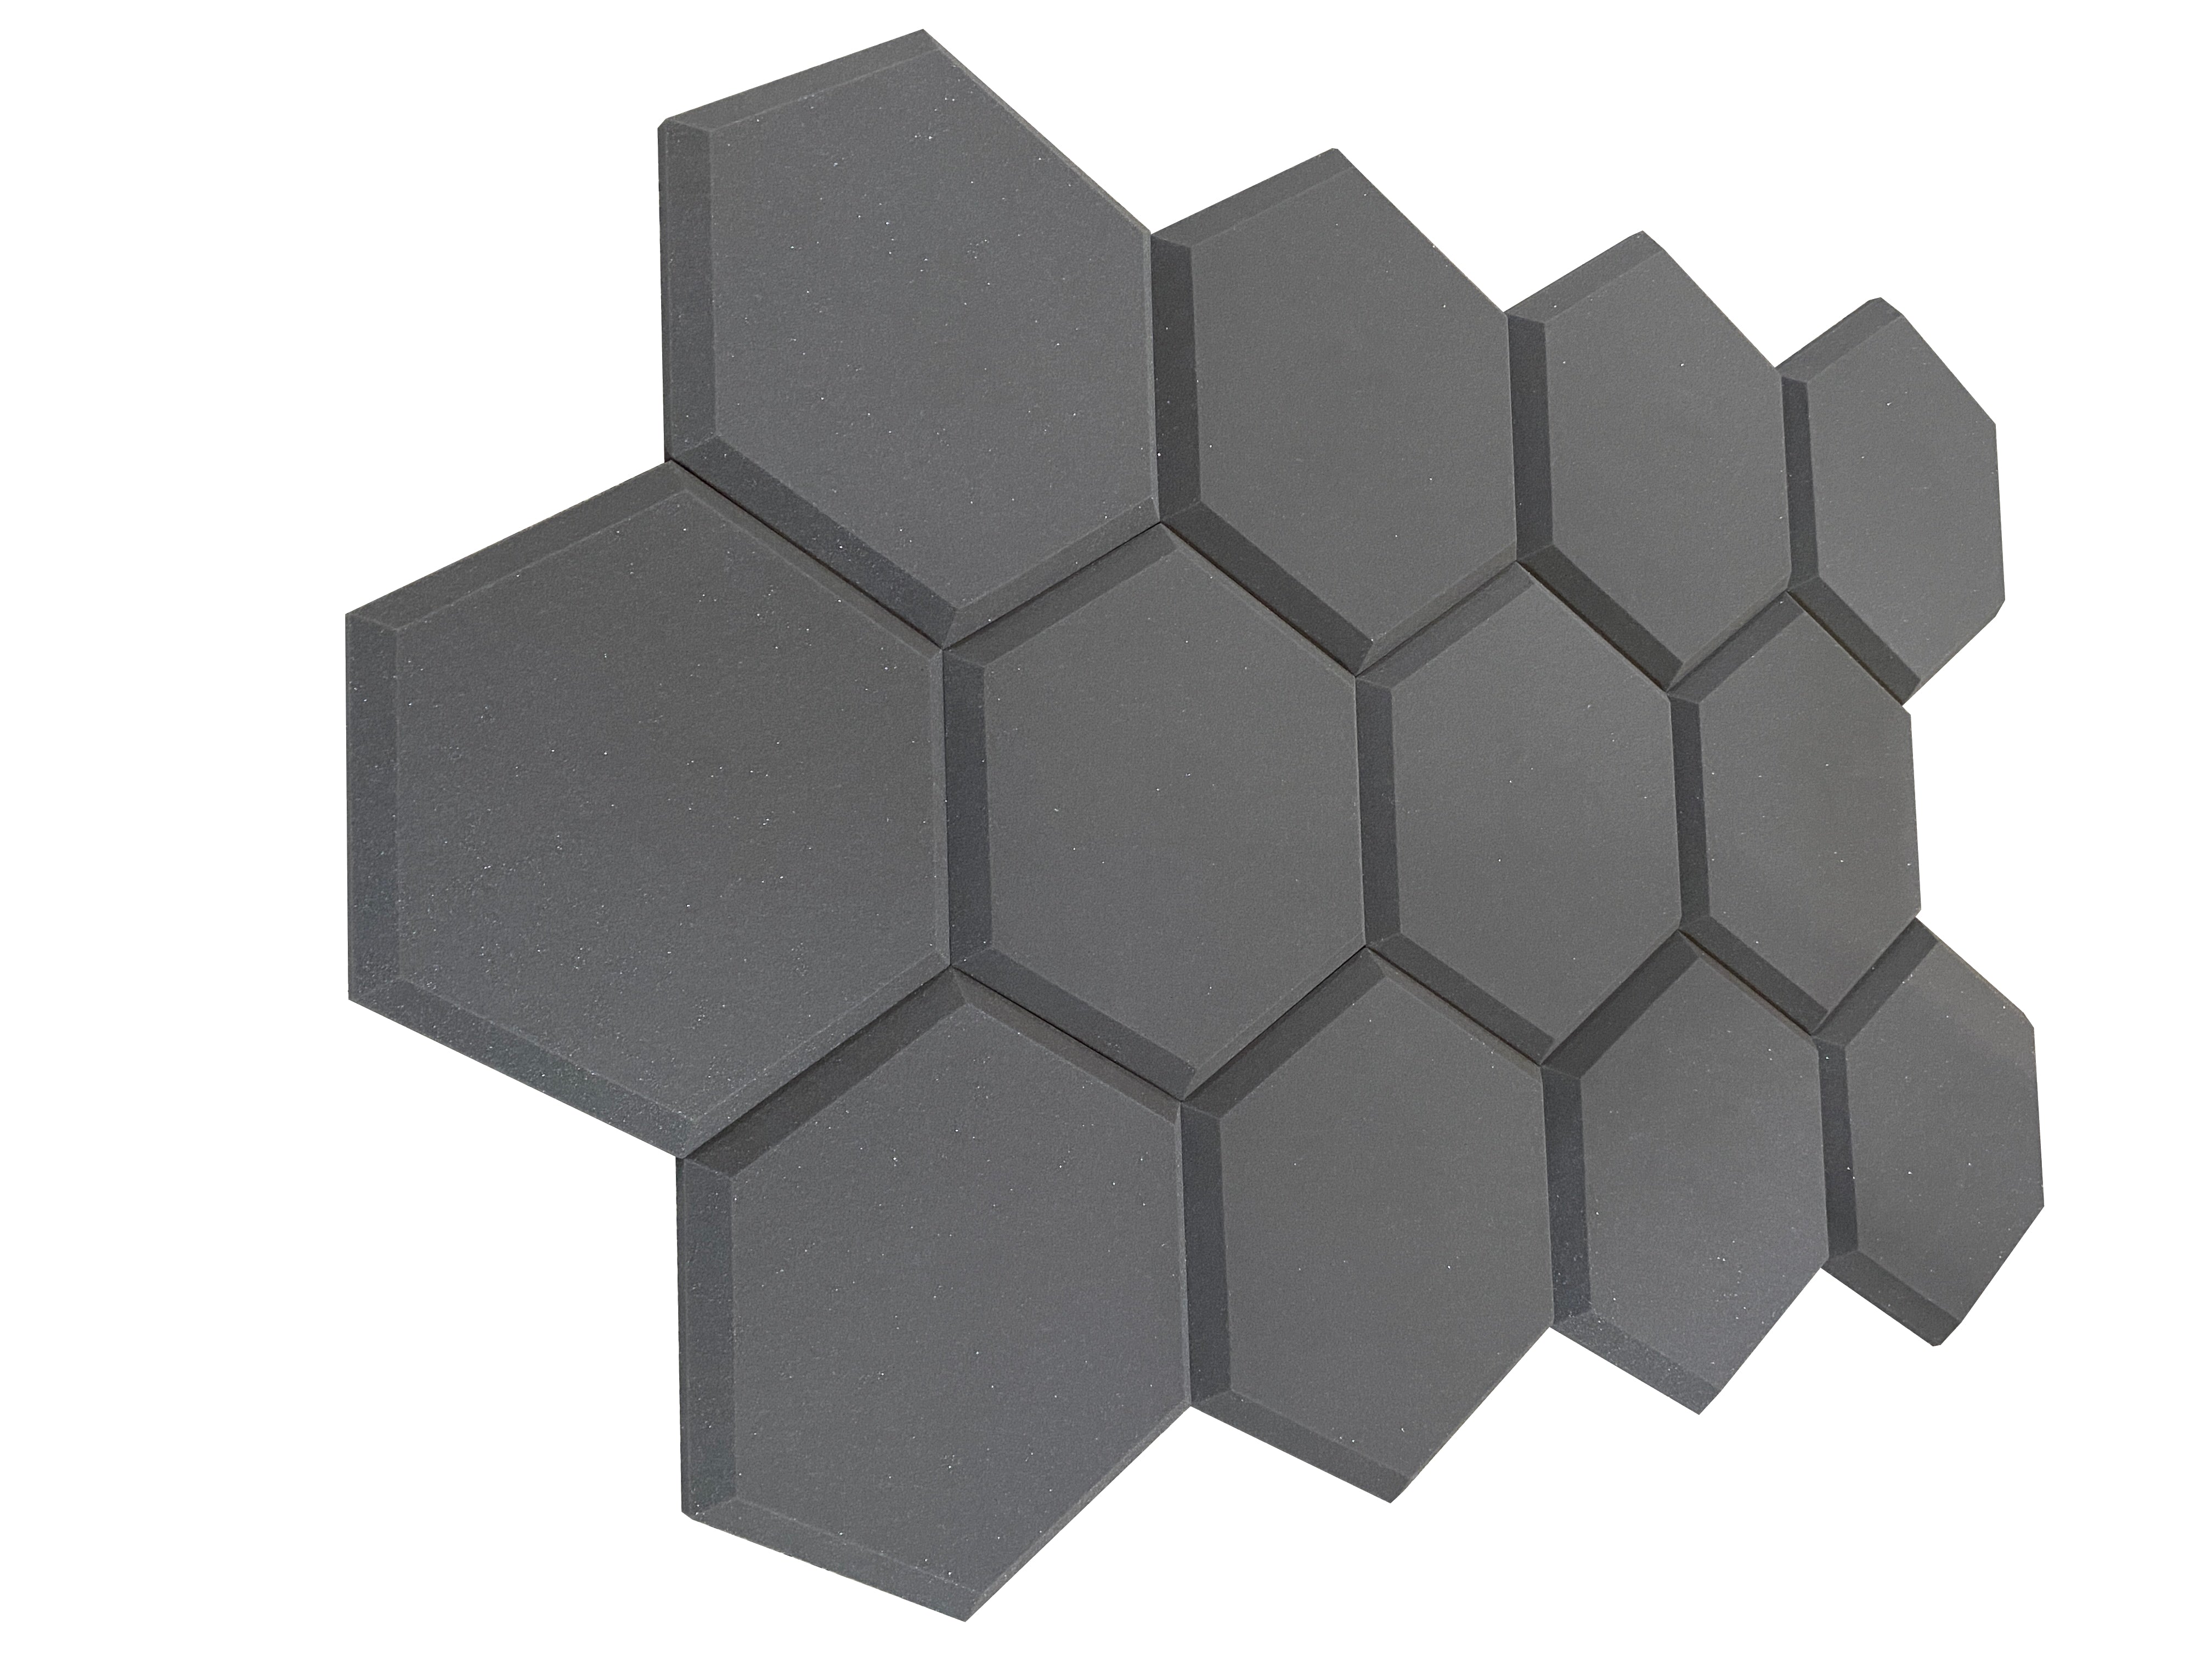 Hexatile2 Acoustic Studio Foam Tile Pack – 12 Fliesen, 2,88 m² Abdeckung